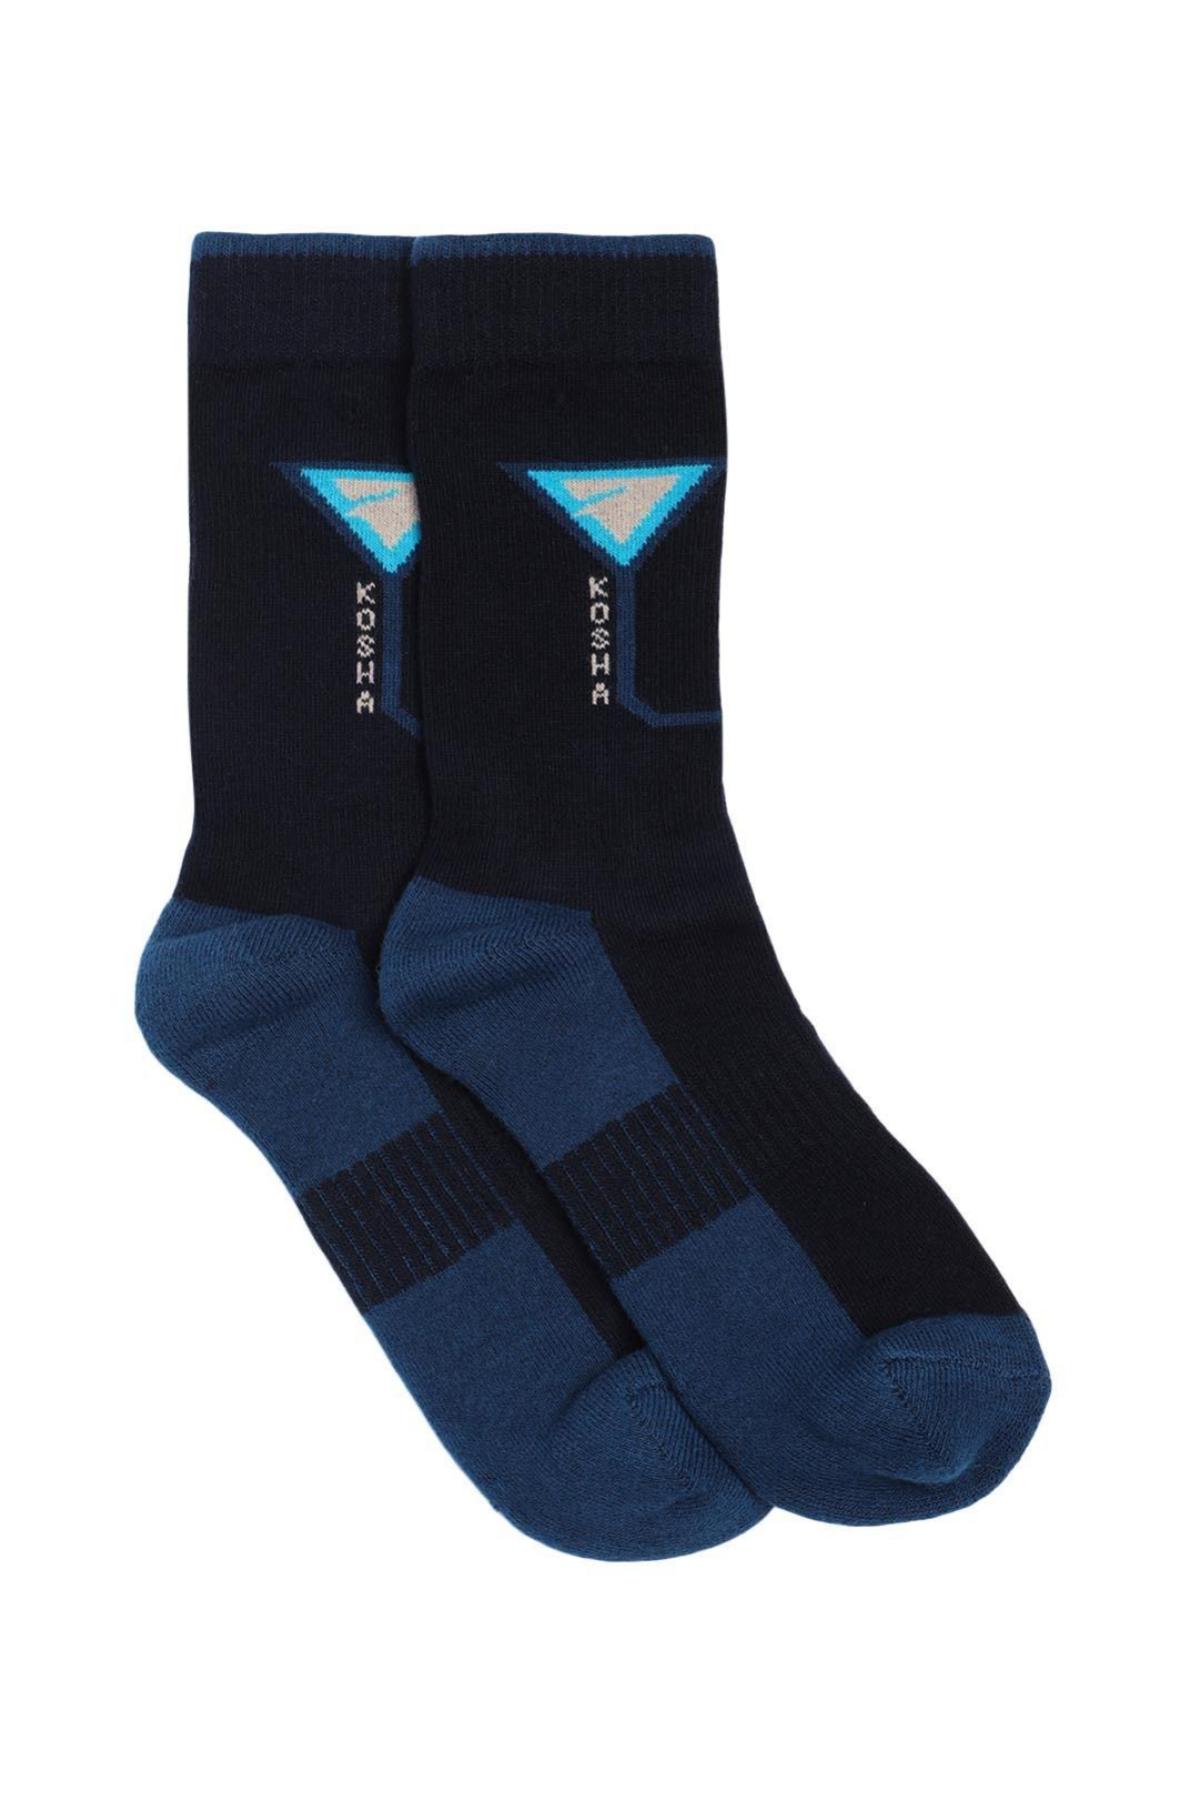 Navy & Black Regular Length Cotton Sports Socks | Men